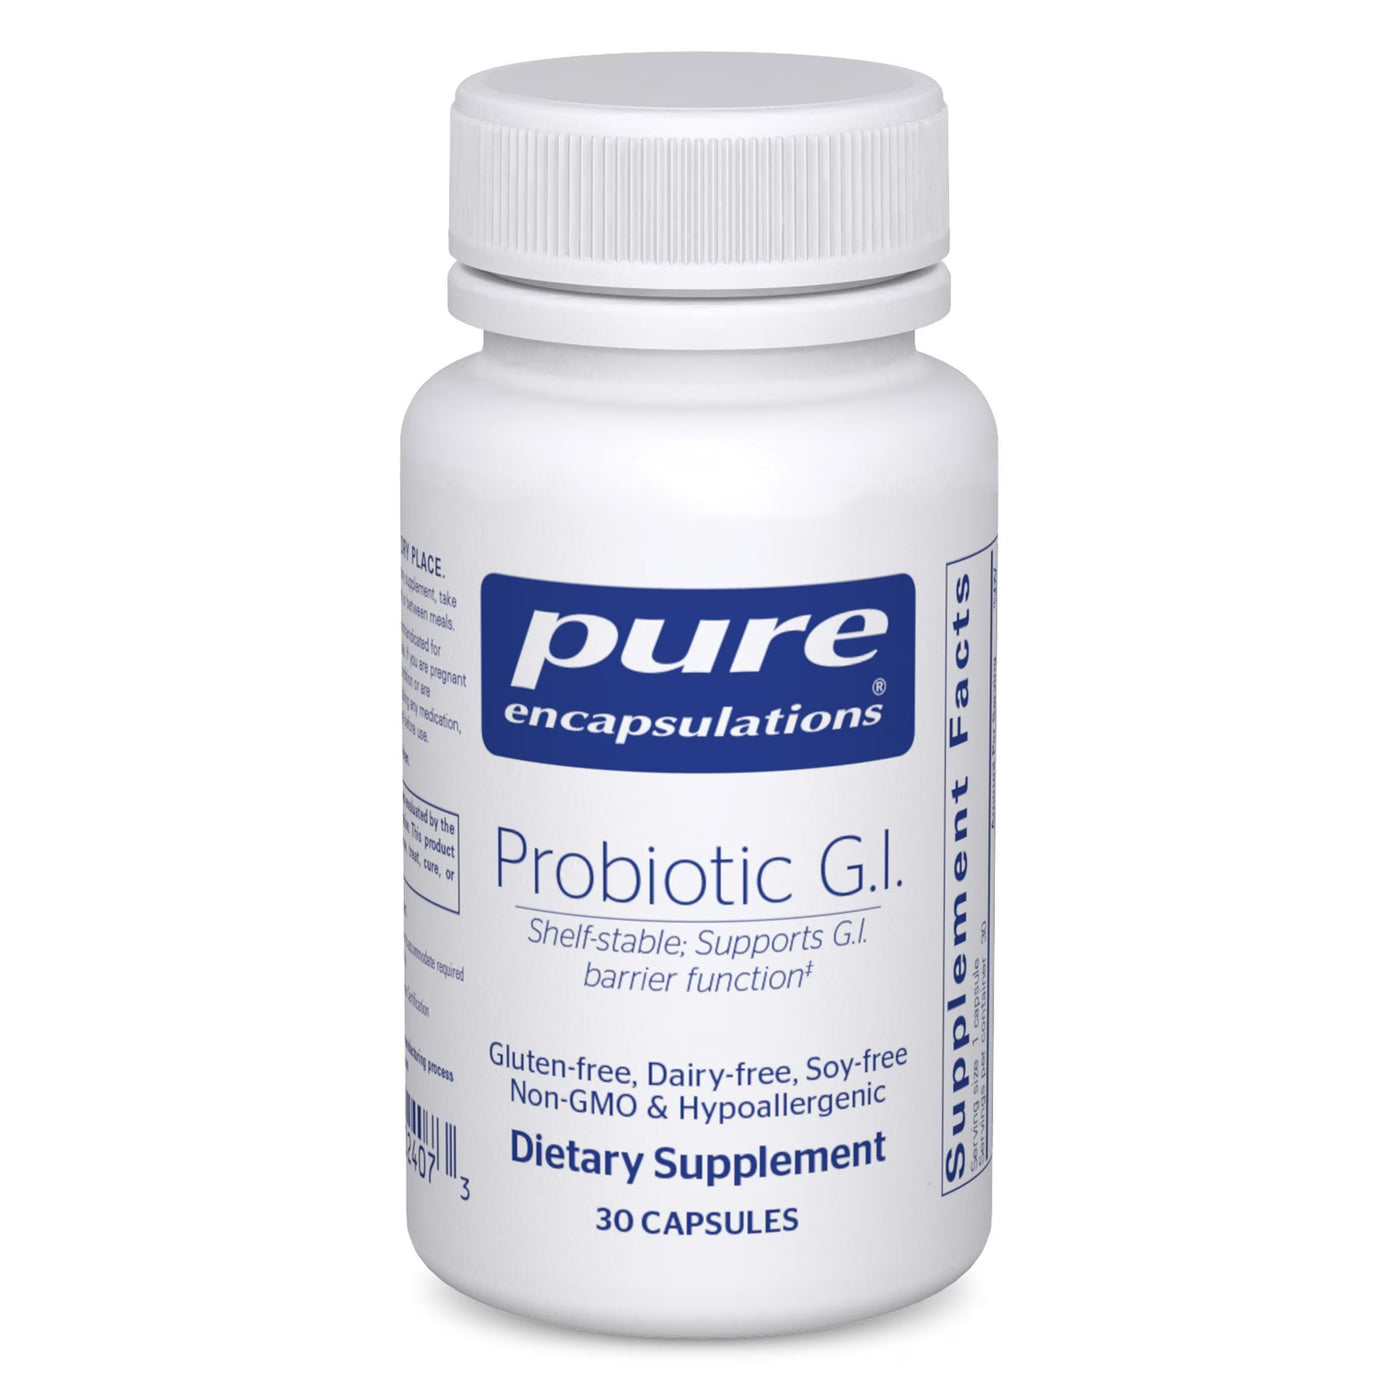 Probiotic GI